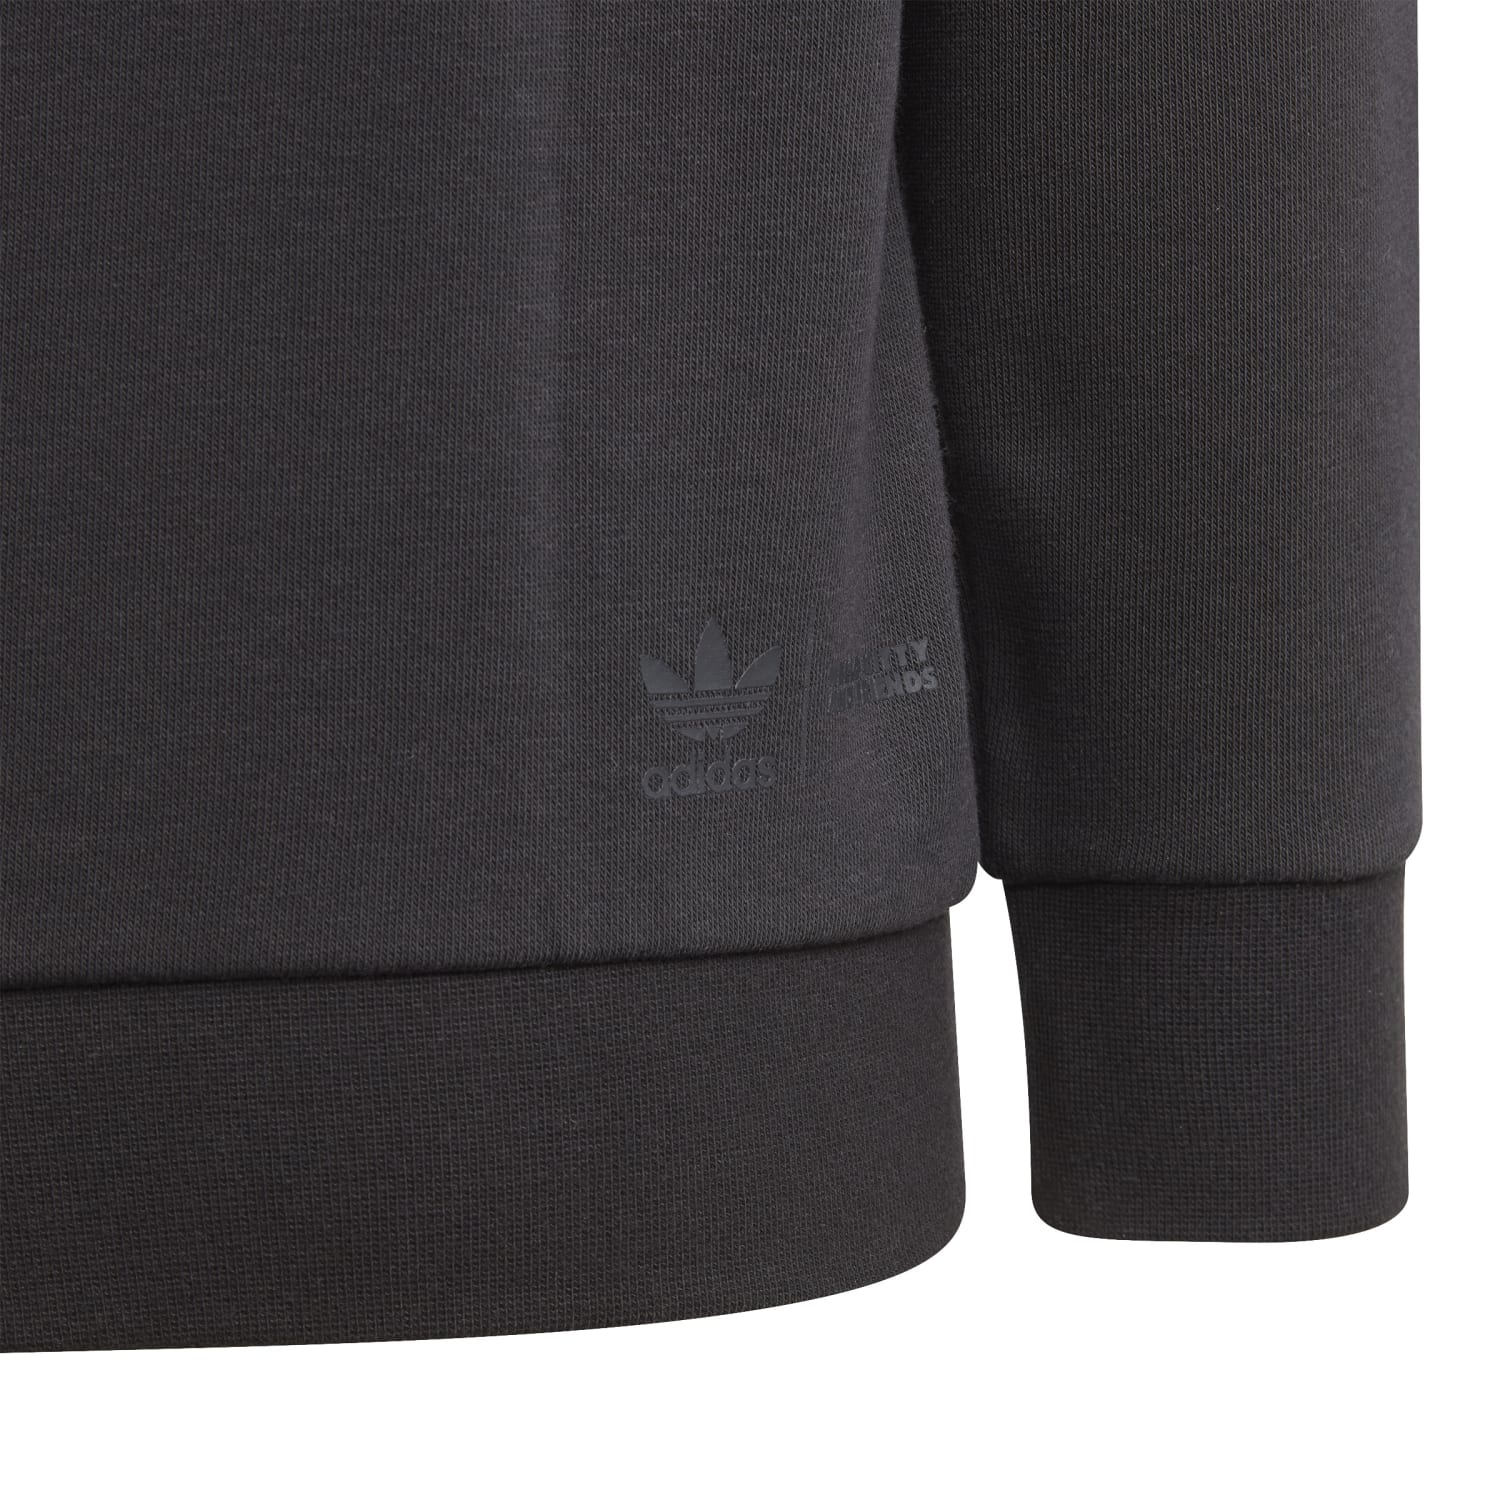 Adidas fabric Youth Crew Set Black IR6791 - TOPS - Canada